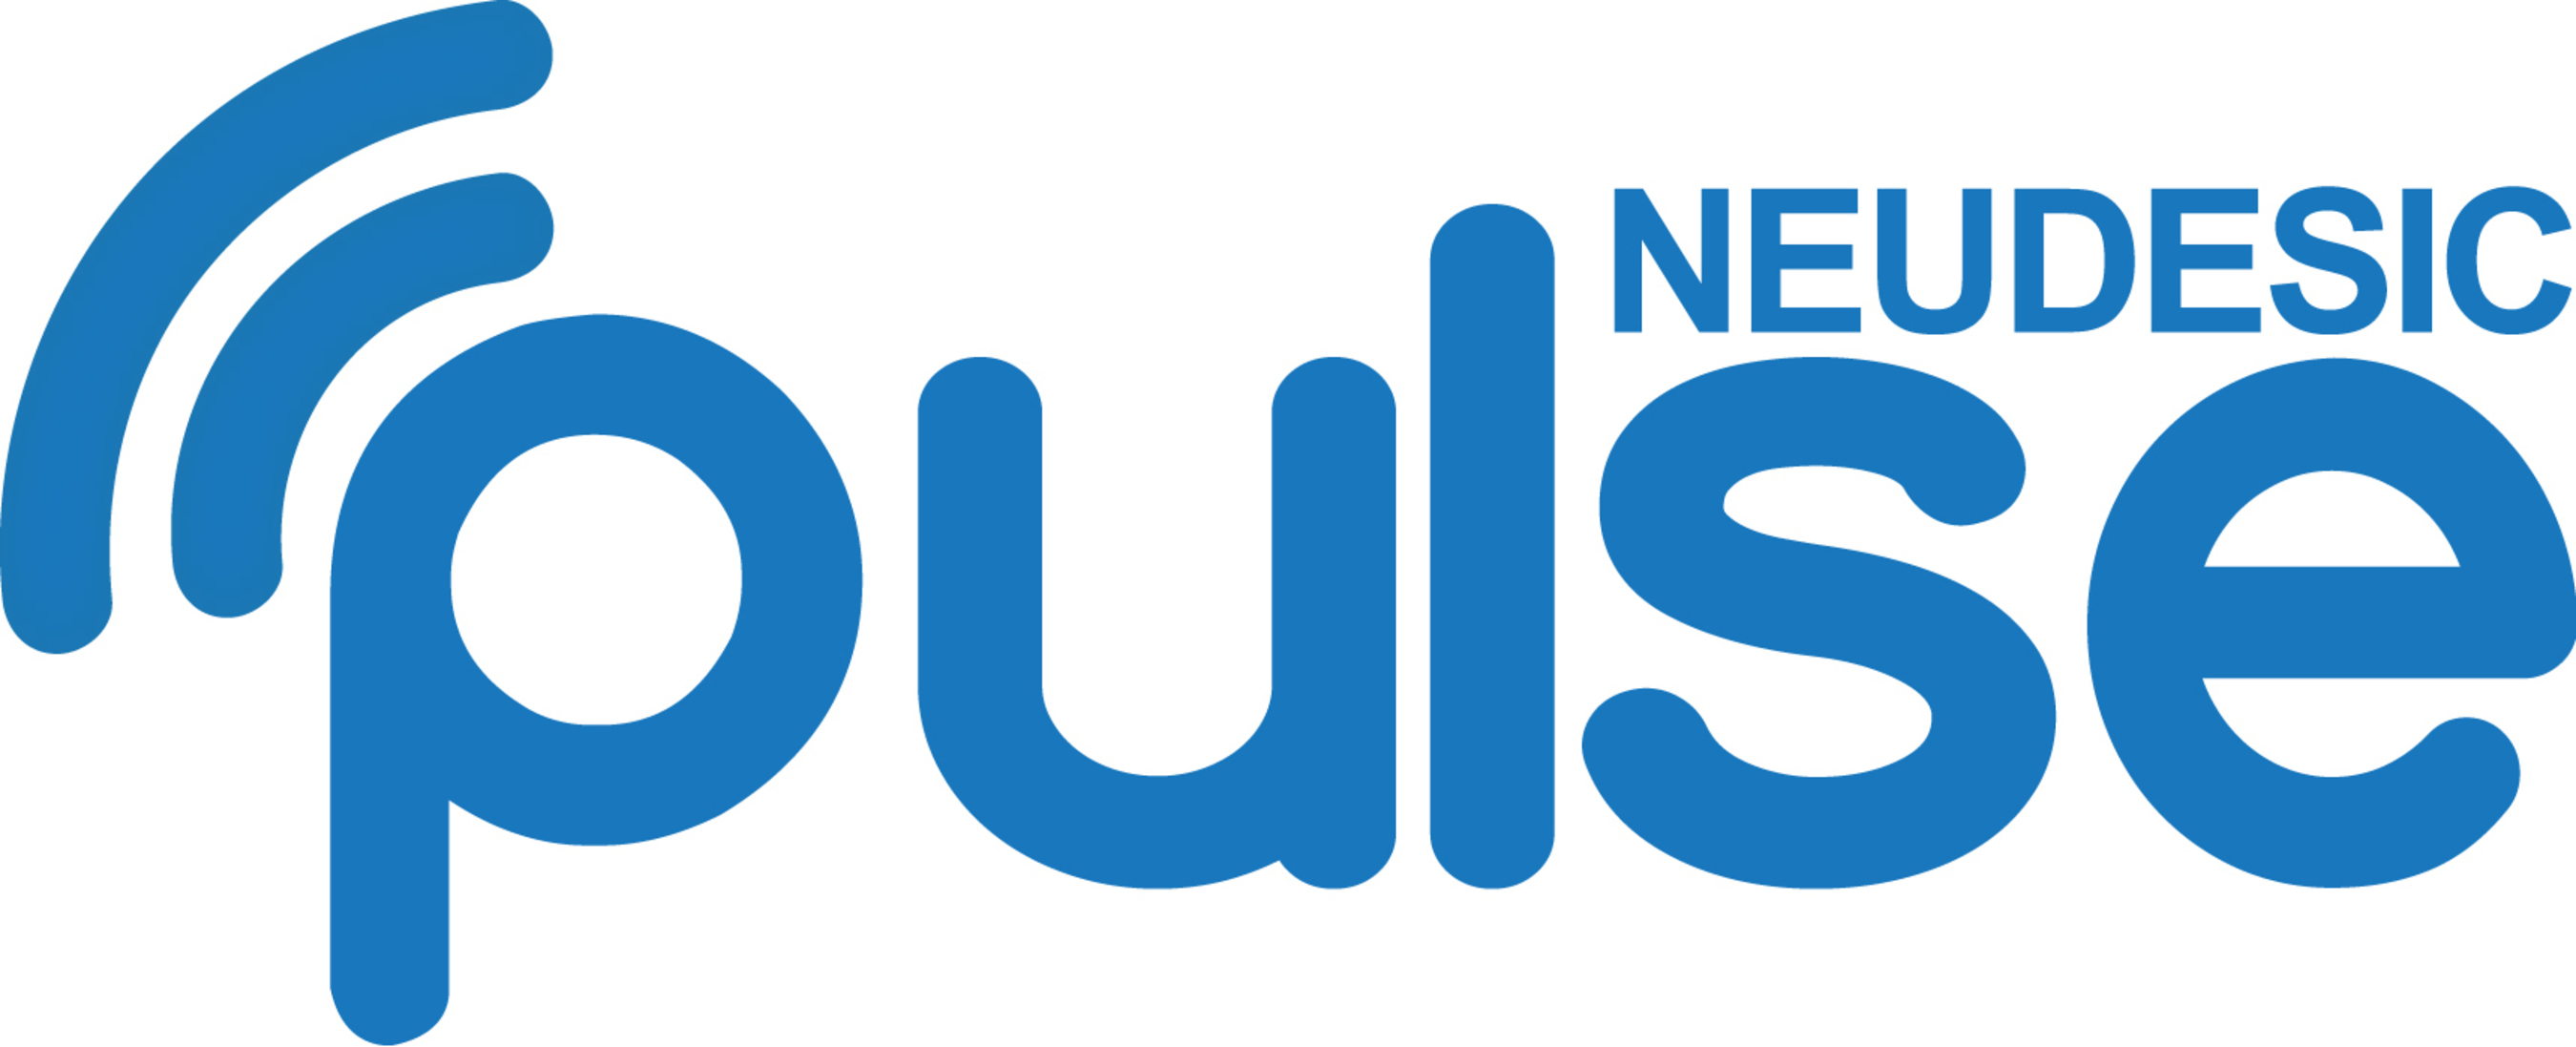 Neudesic Pulse Logo